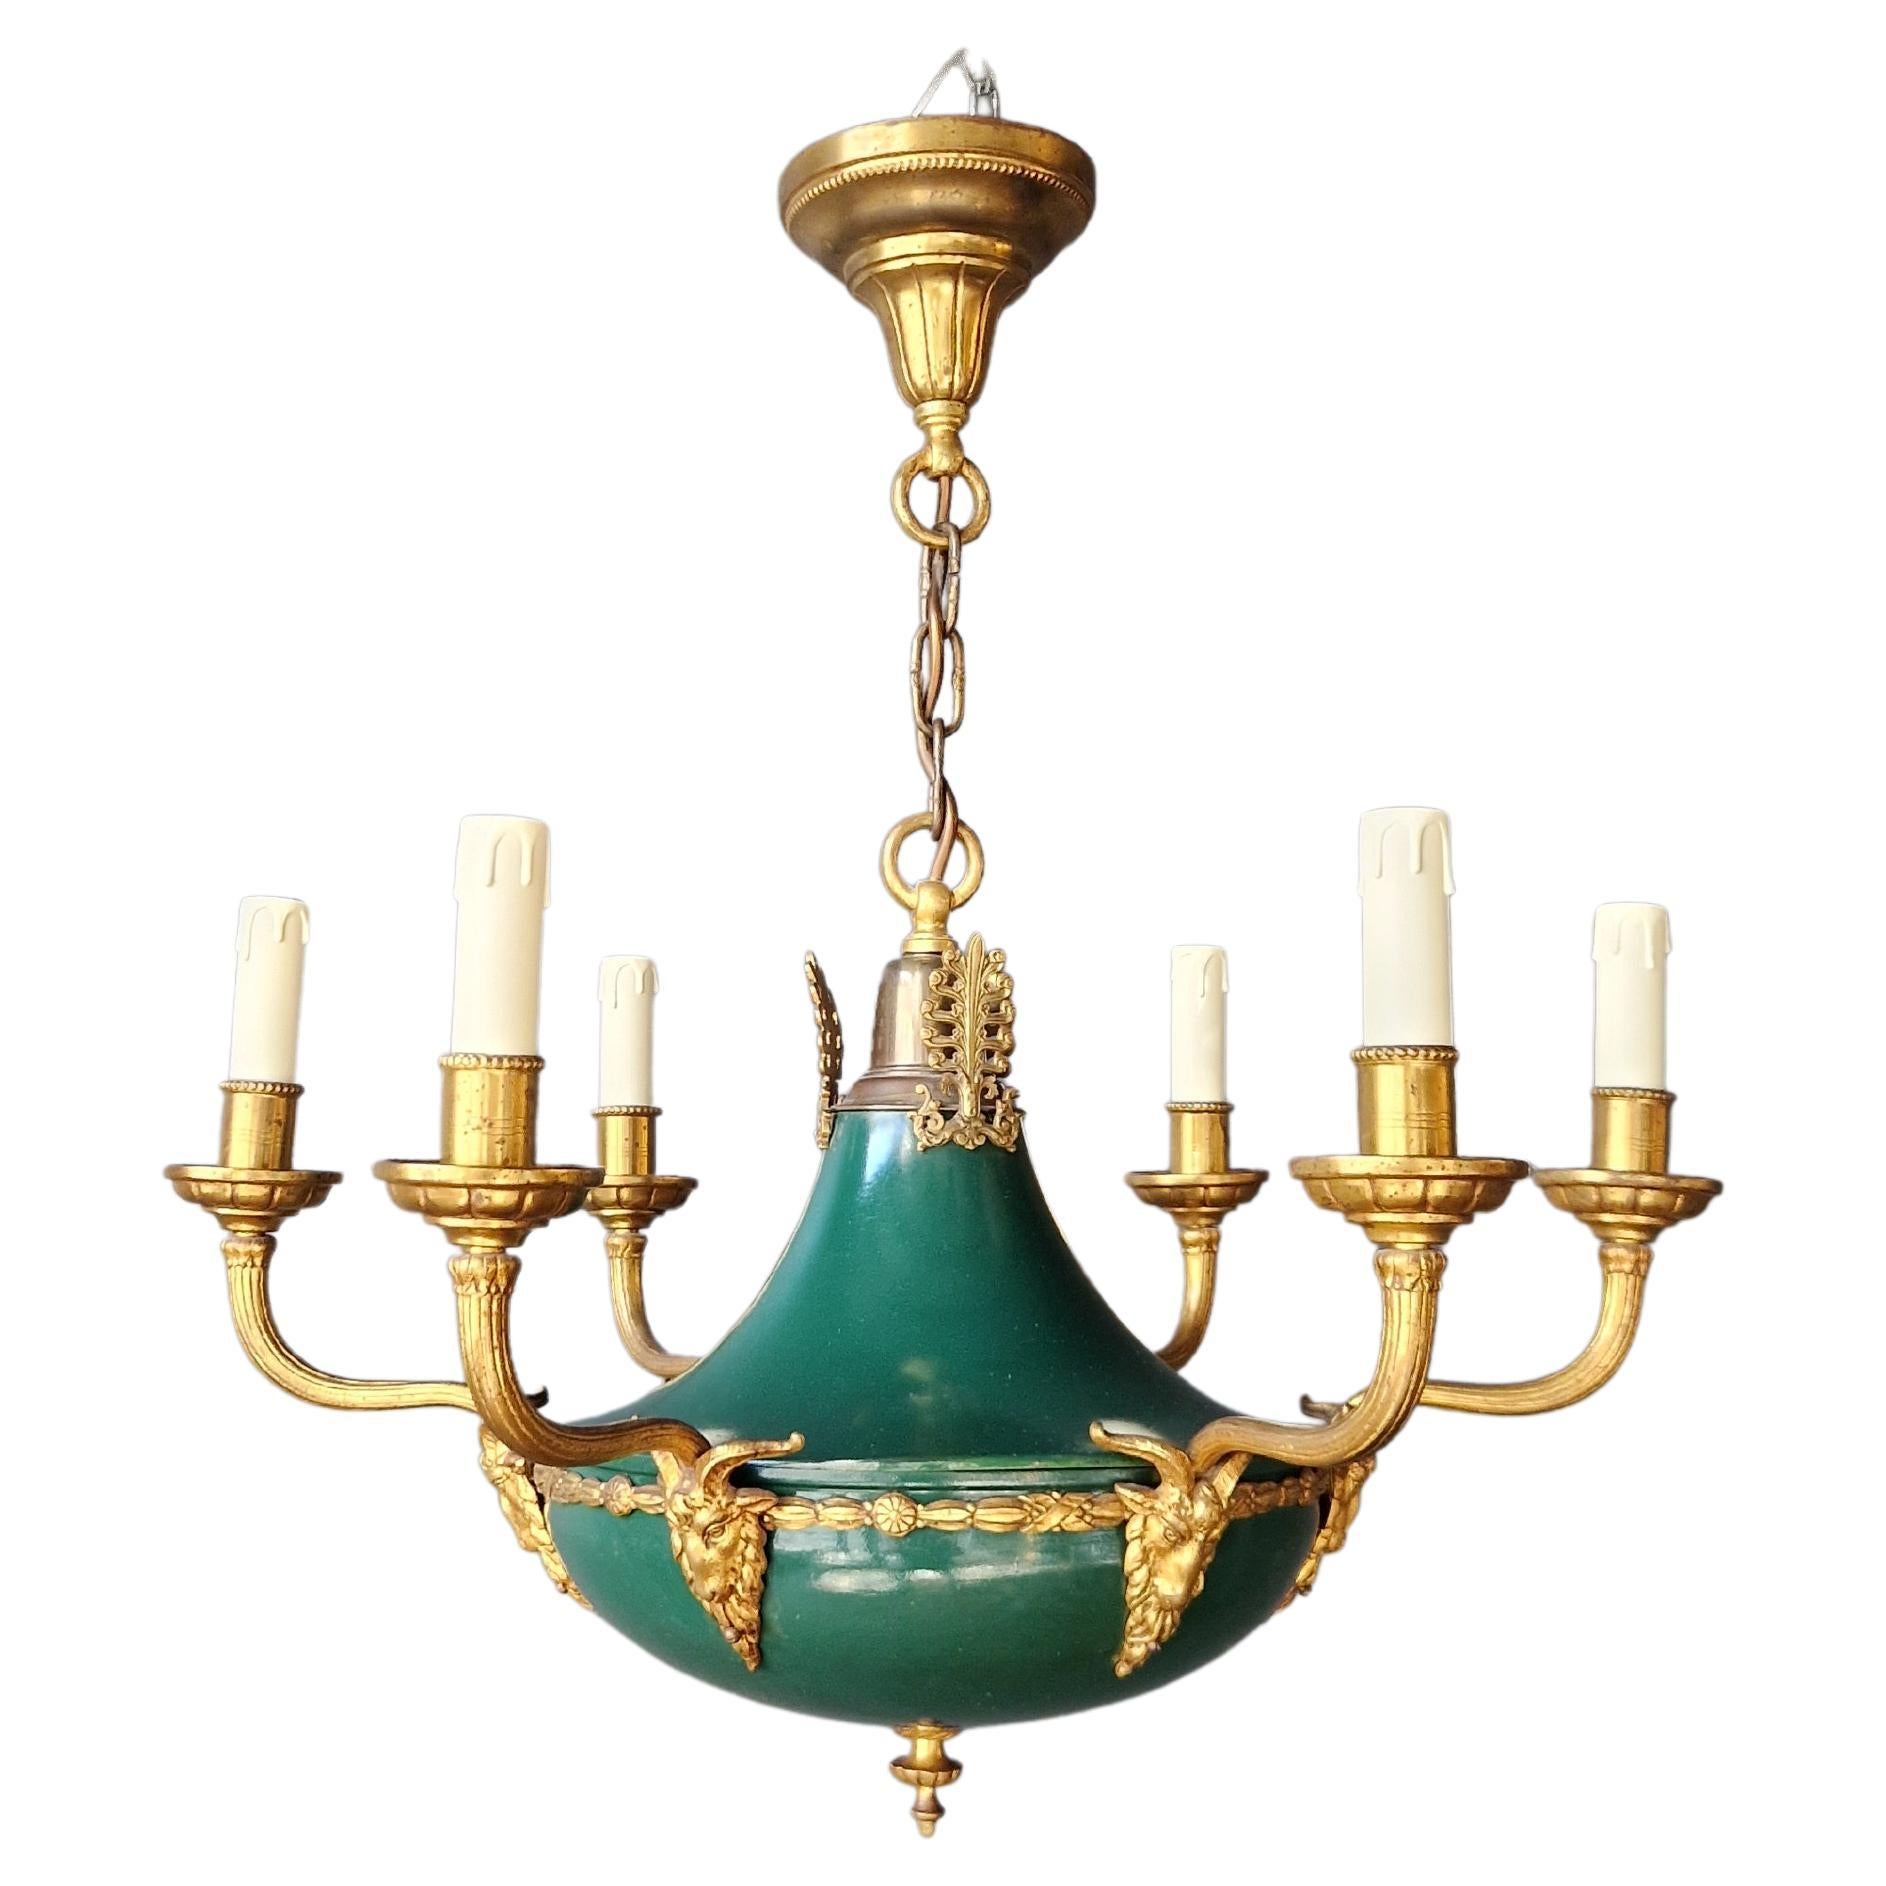 Vergoldeter antiker Empire-Kronleuchter mit neoklassizistischer Patina aus grünem Messing